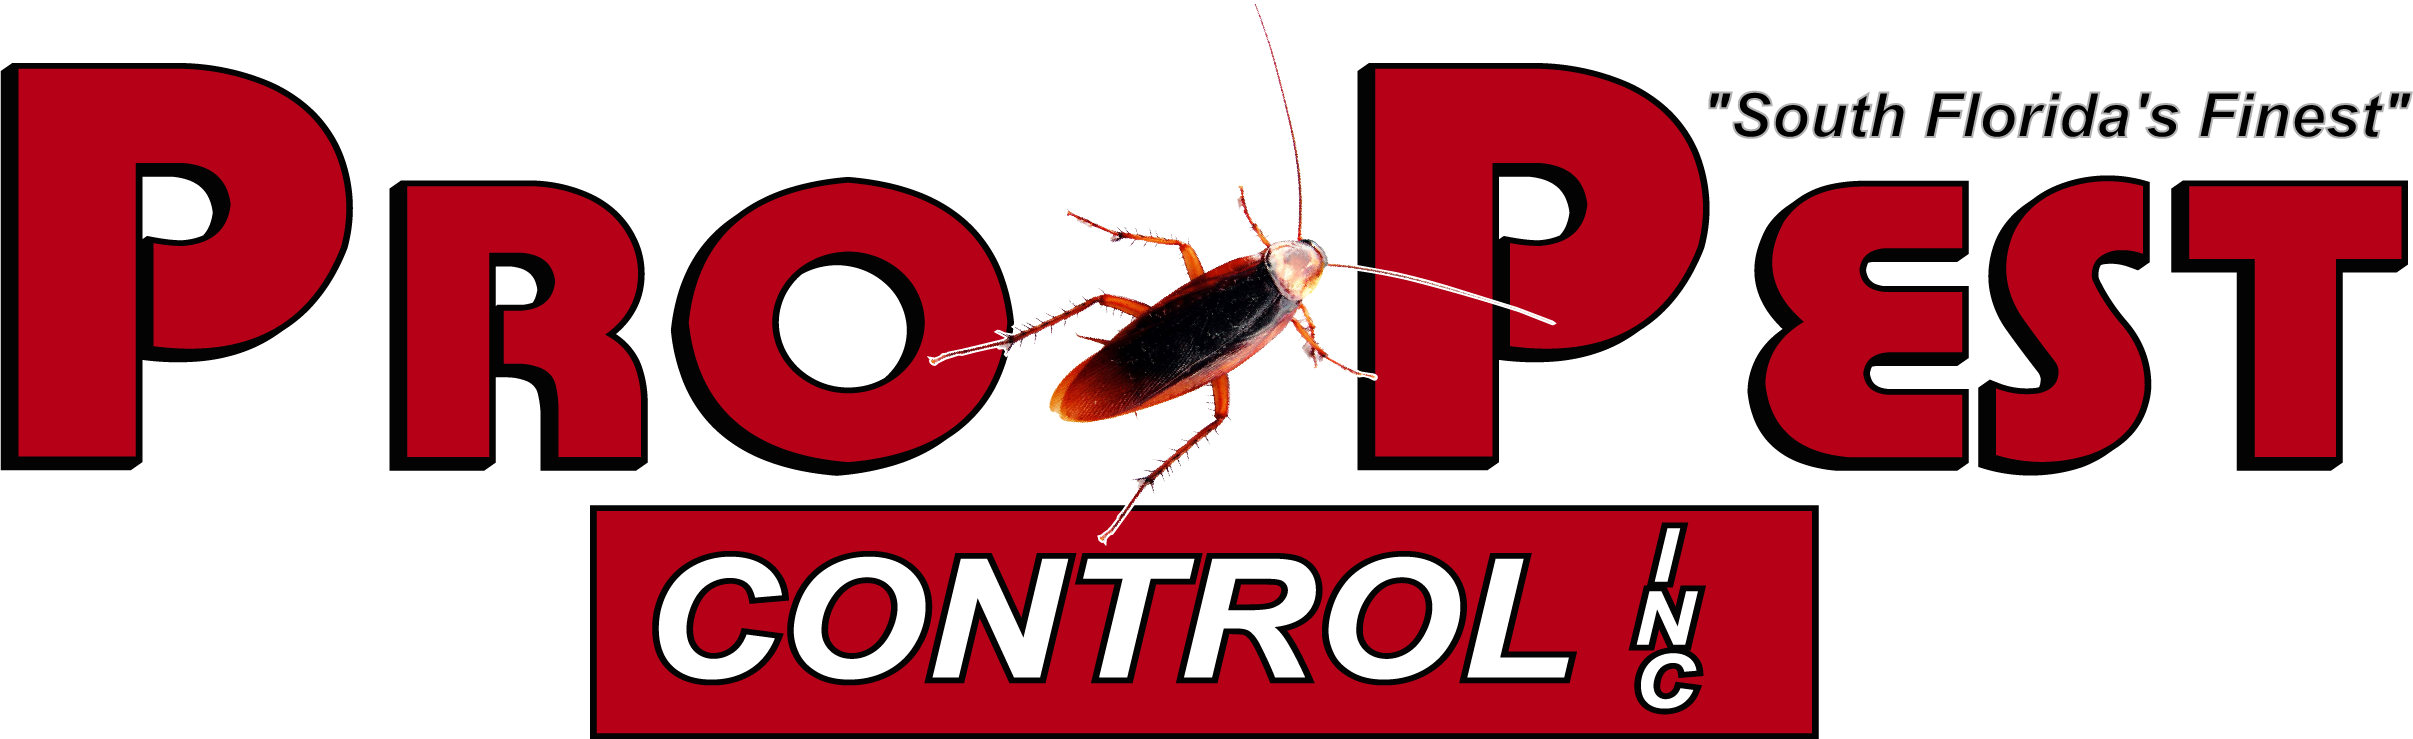 Homepage - Pro Pest Control, Inc.